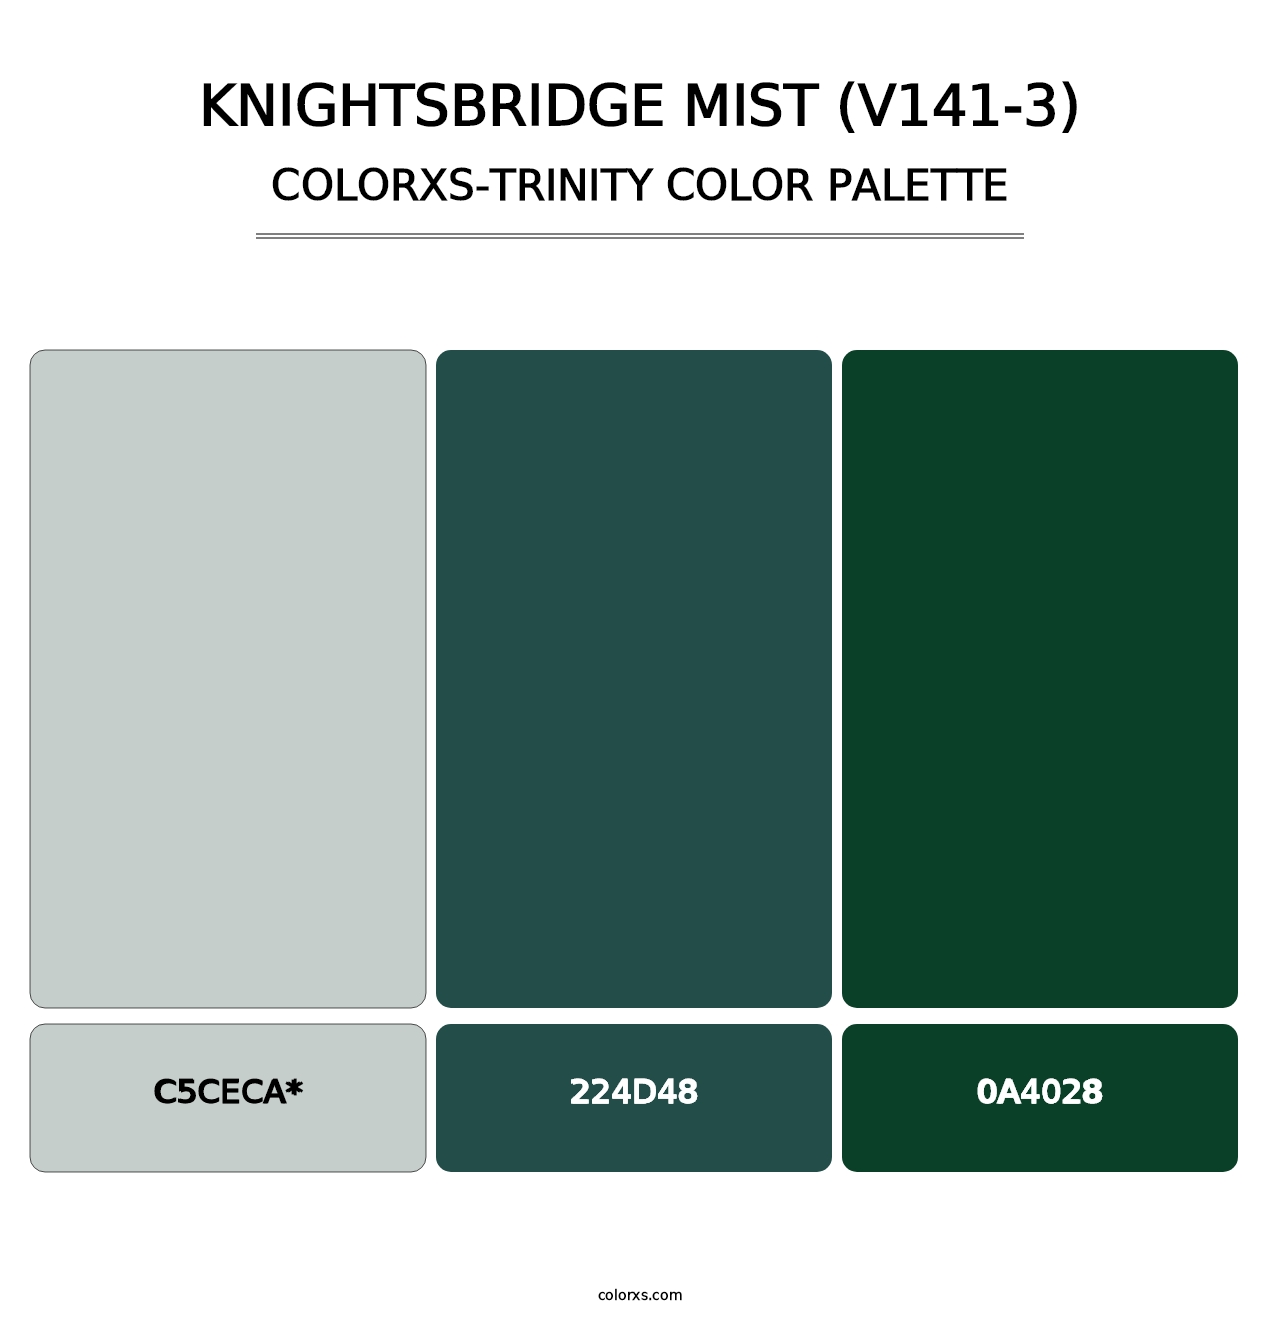 Knightsbridge Mist (V141-3) - Colorxs Trinity Palette